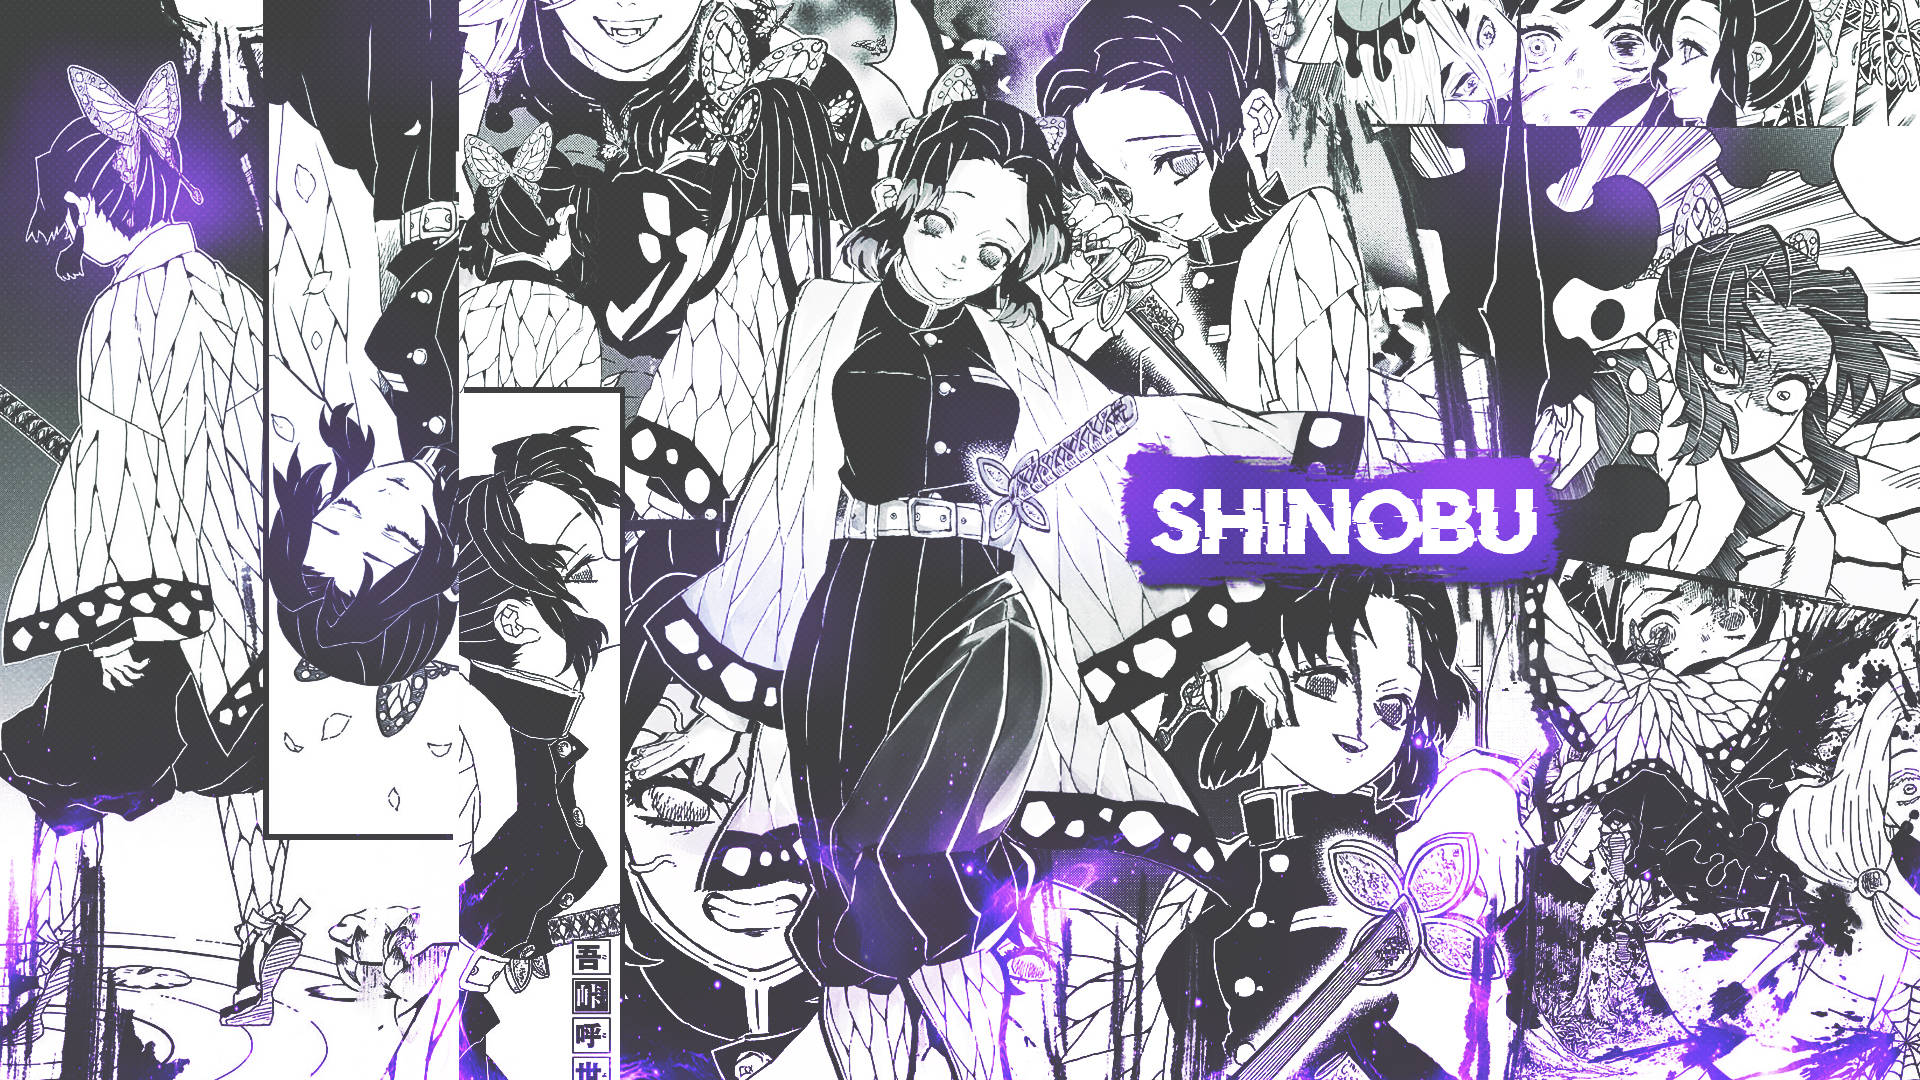 Shinobu Manga Art Collage Wallpaper